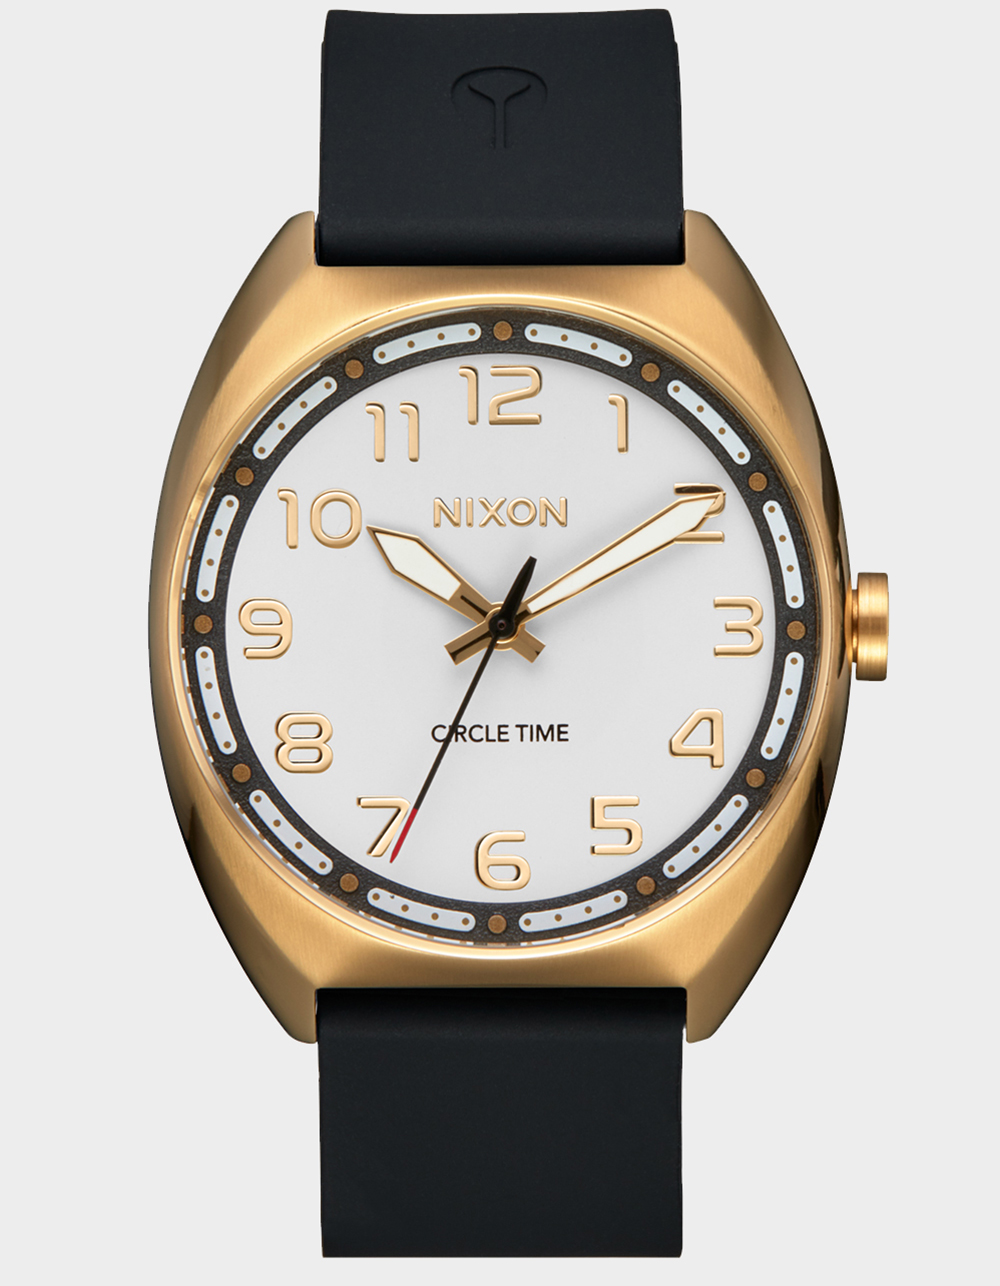 NIXON Mullet Gold Watch